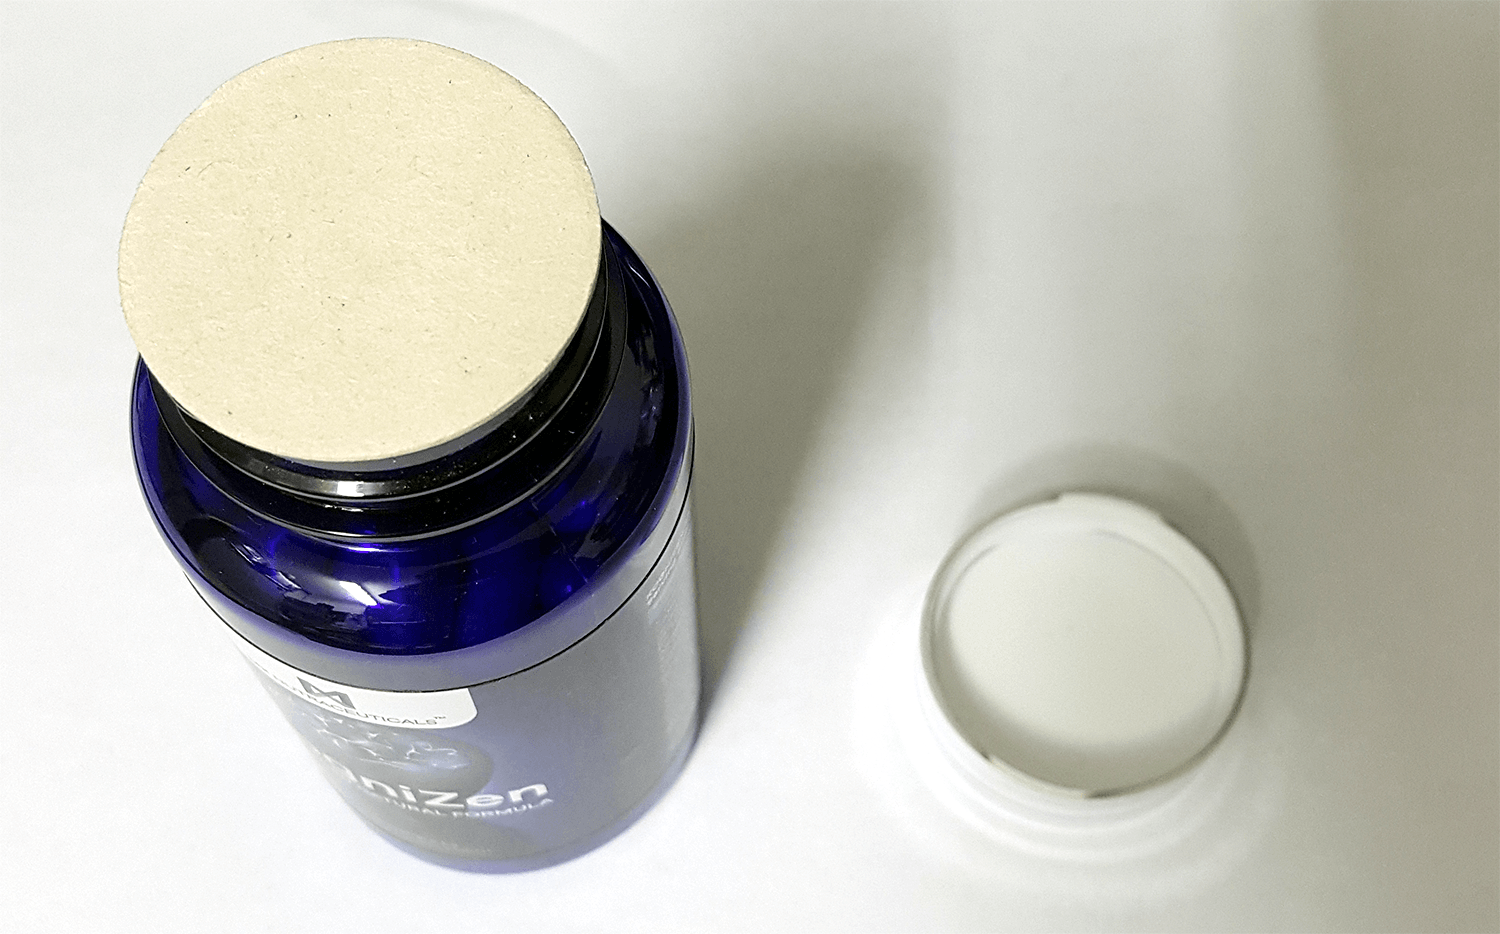 KogniZen bottle opening moisture absorbent stuck on the opening seal